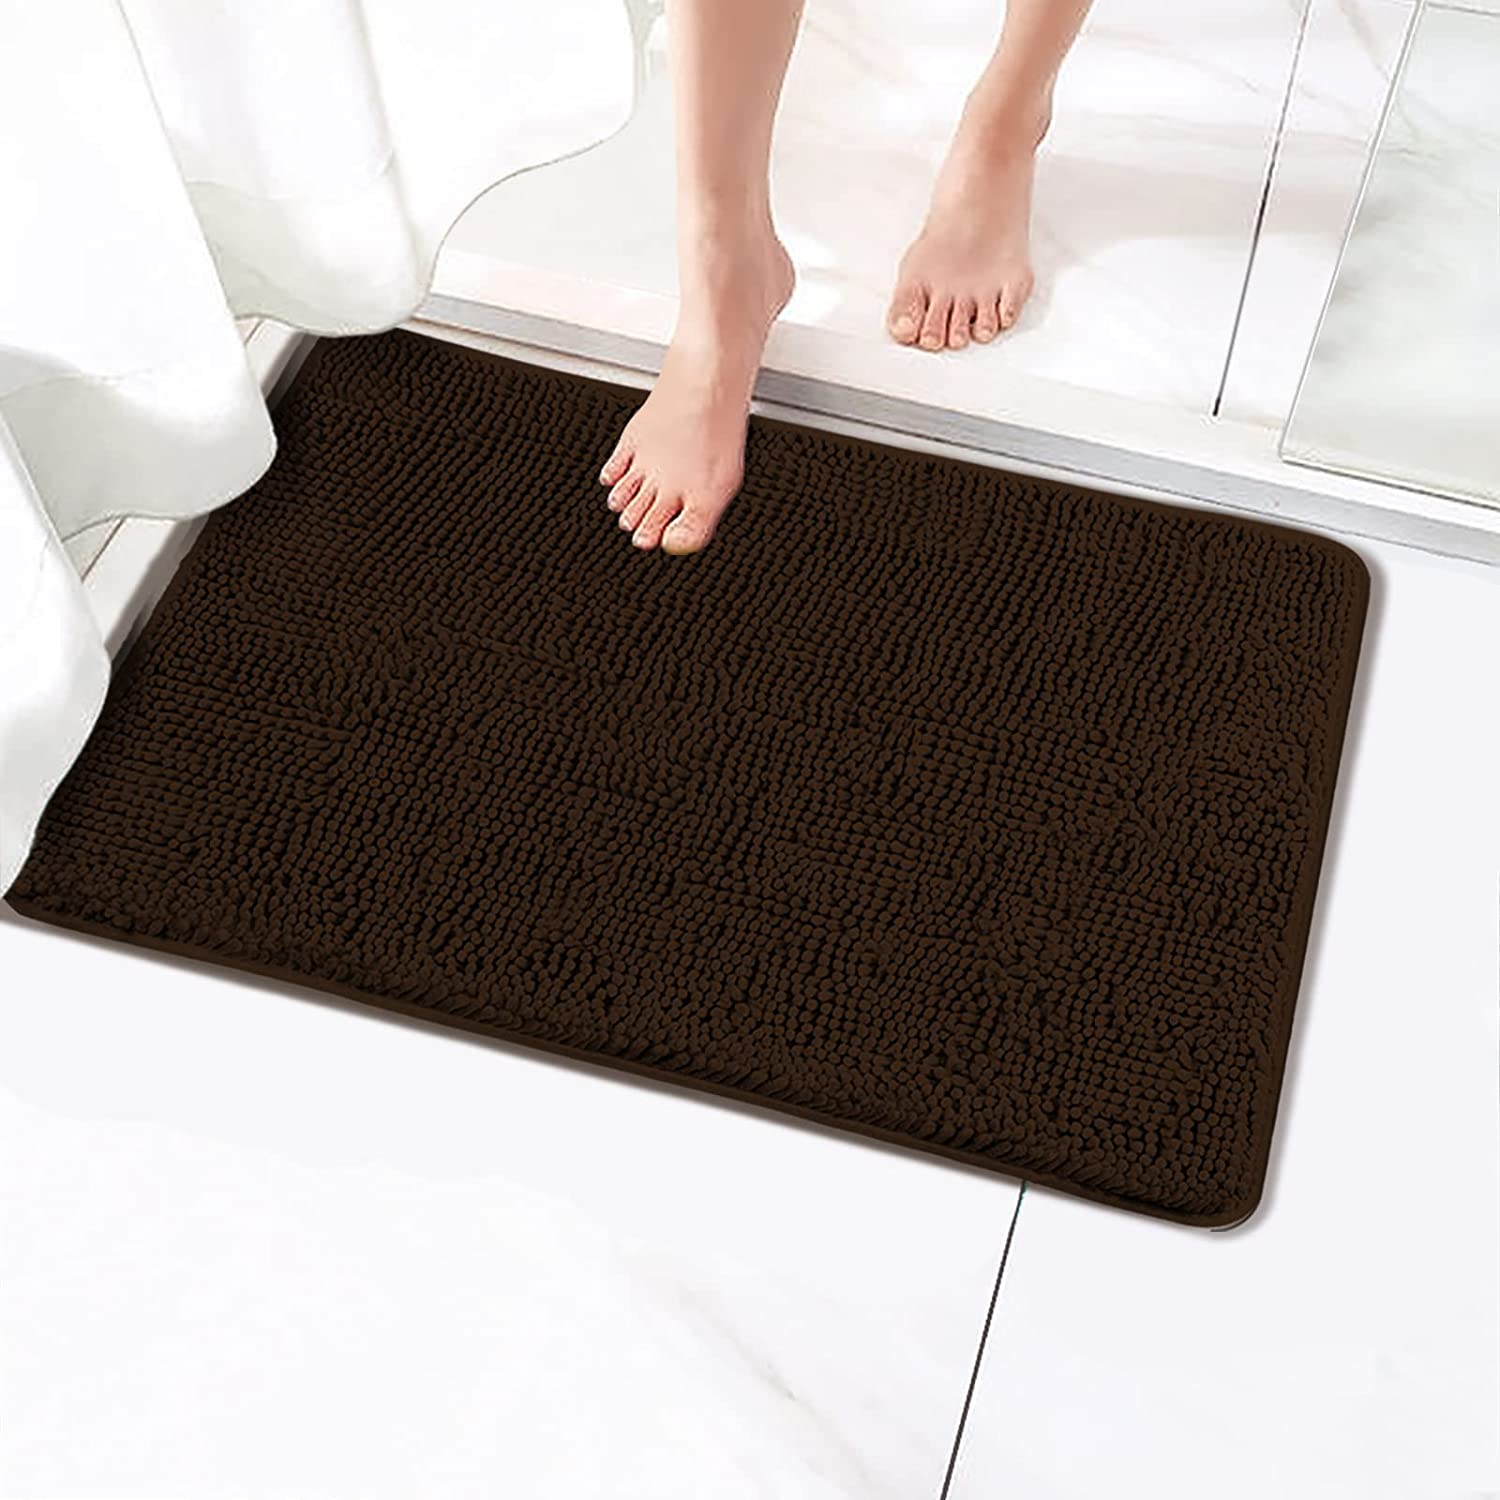 Secura Housewares Soft Microfiber Bathroom Rugs, 47 x 28 Inches Non Slip Bath  Mat for Door, Bathroom & Bedroom with Water Absorb